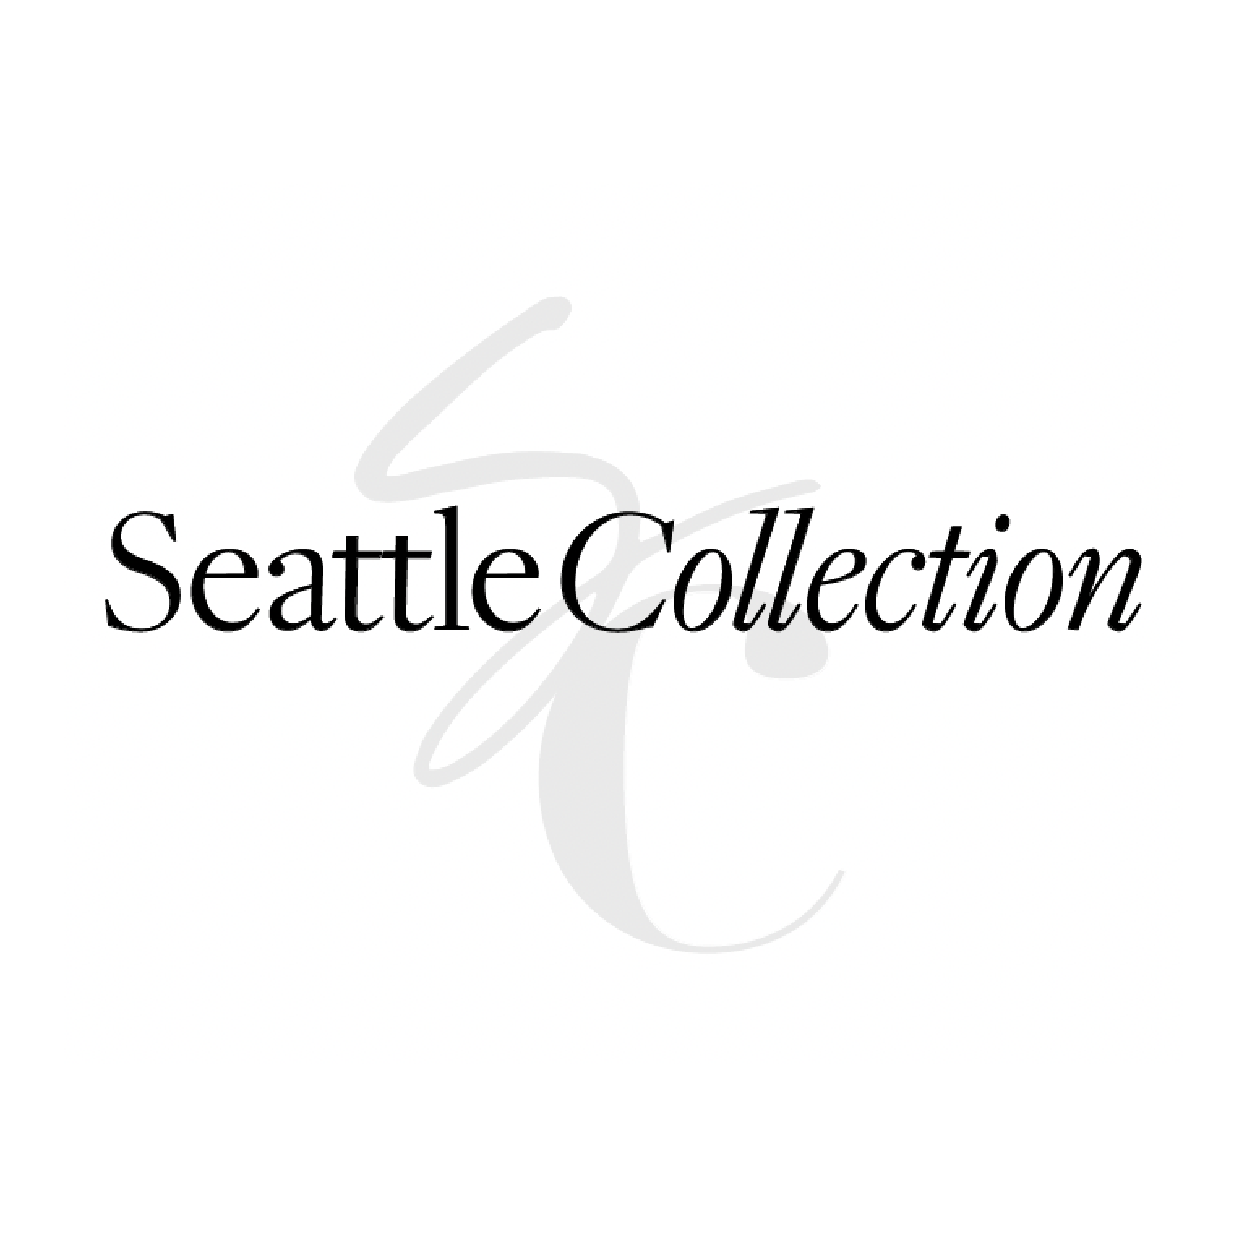 Hyatt_A Seattle Collection_LogoComps-11.png